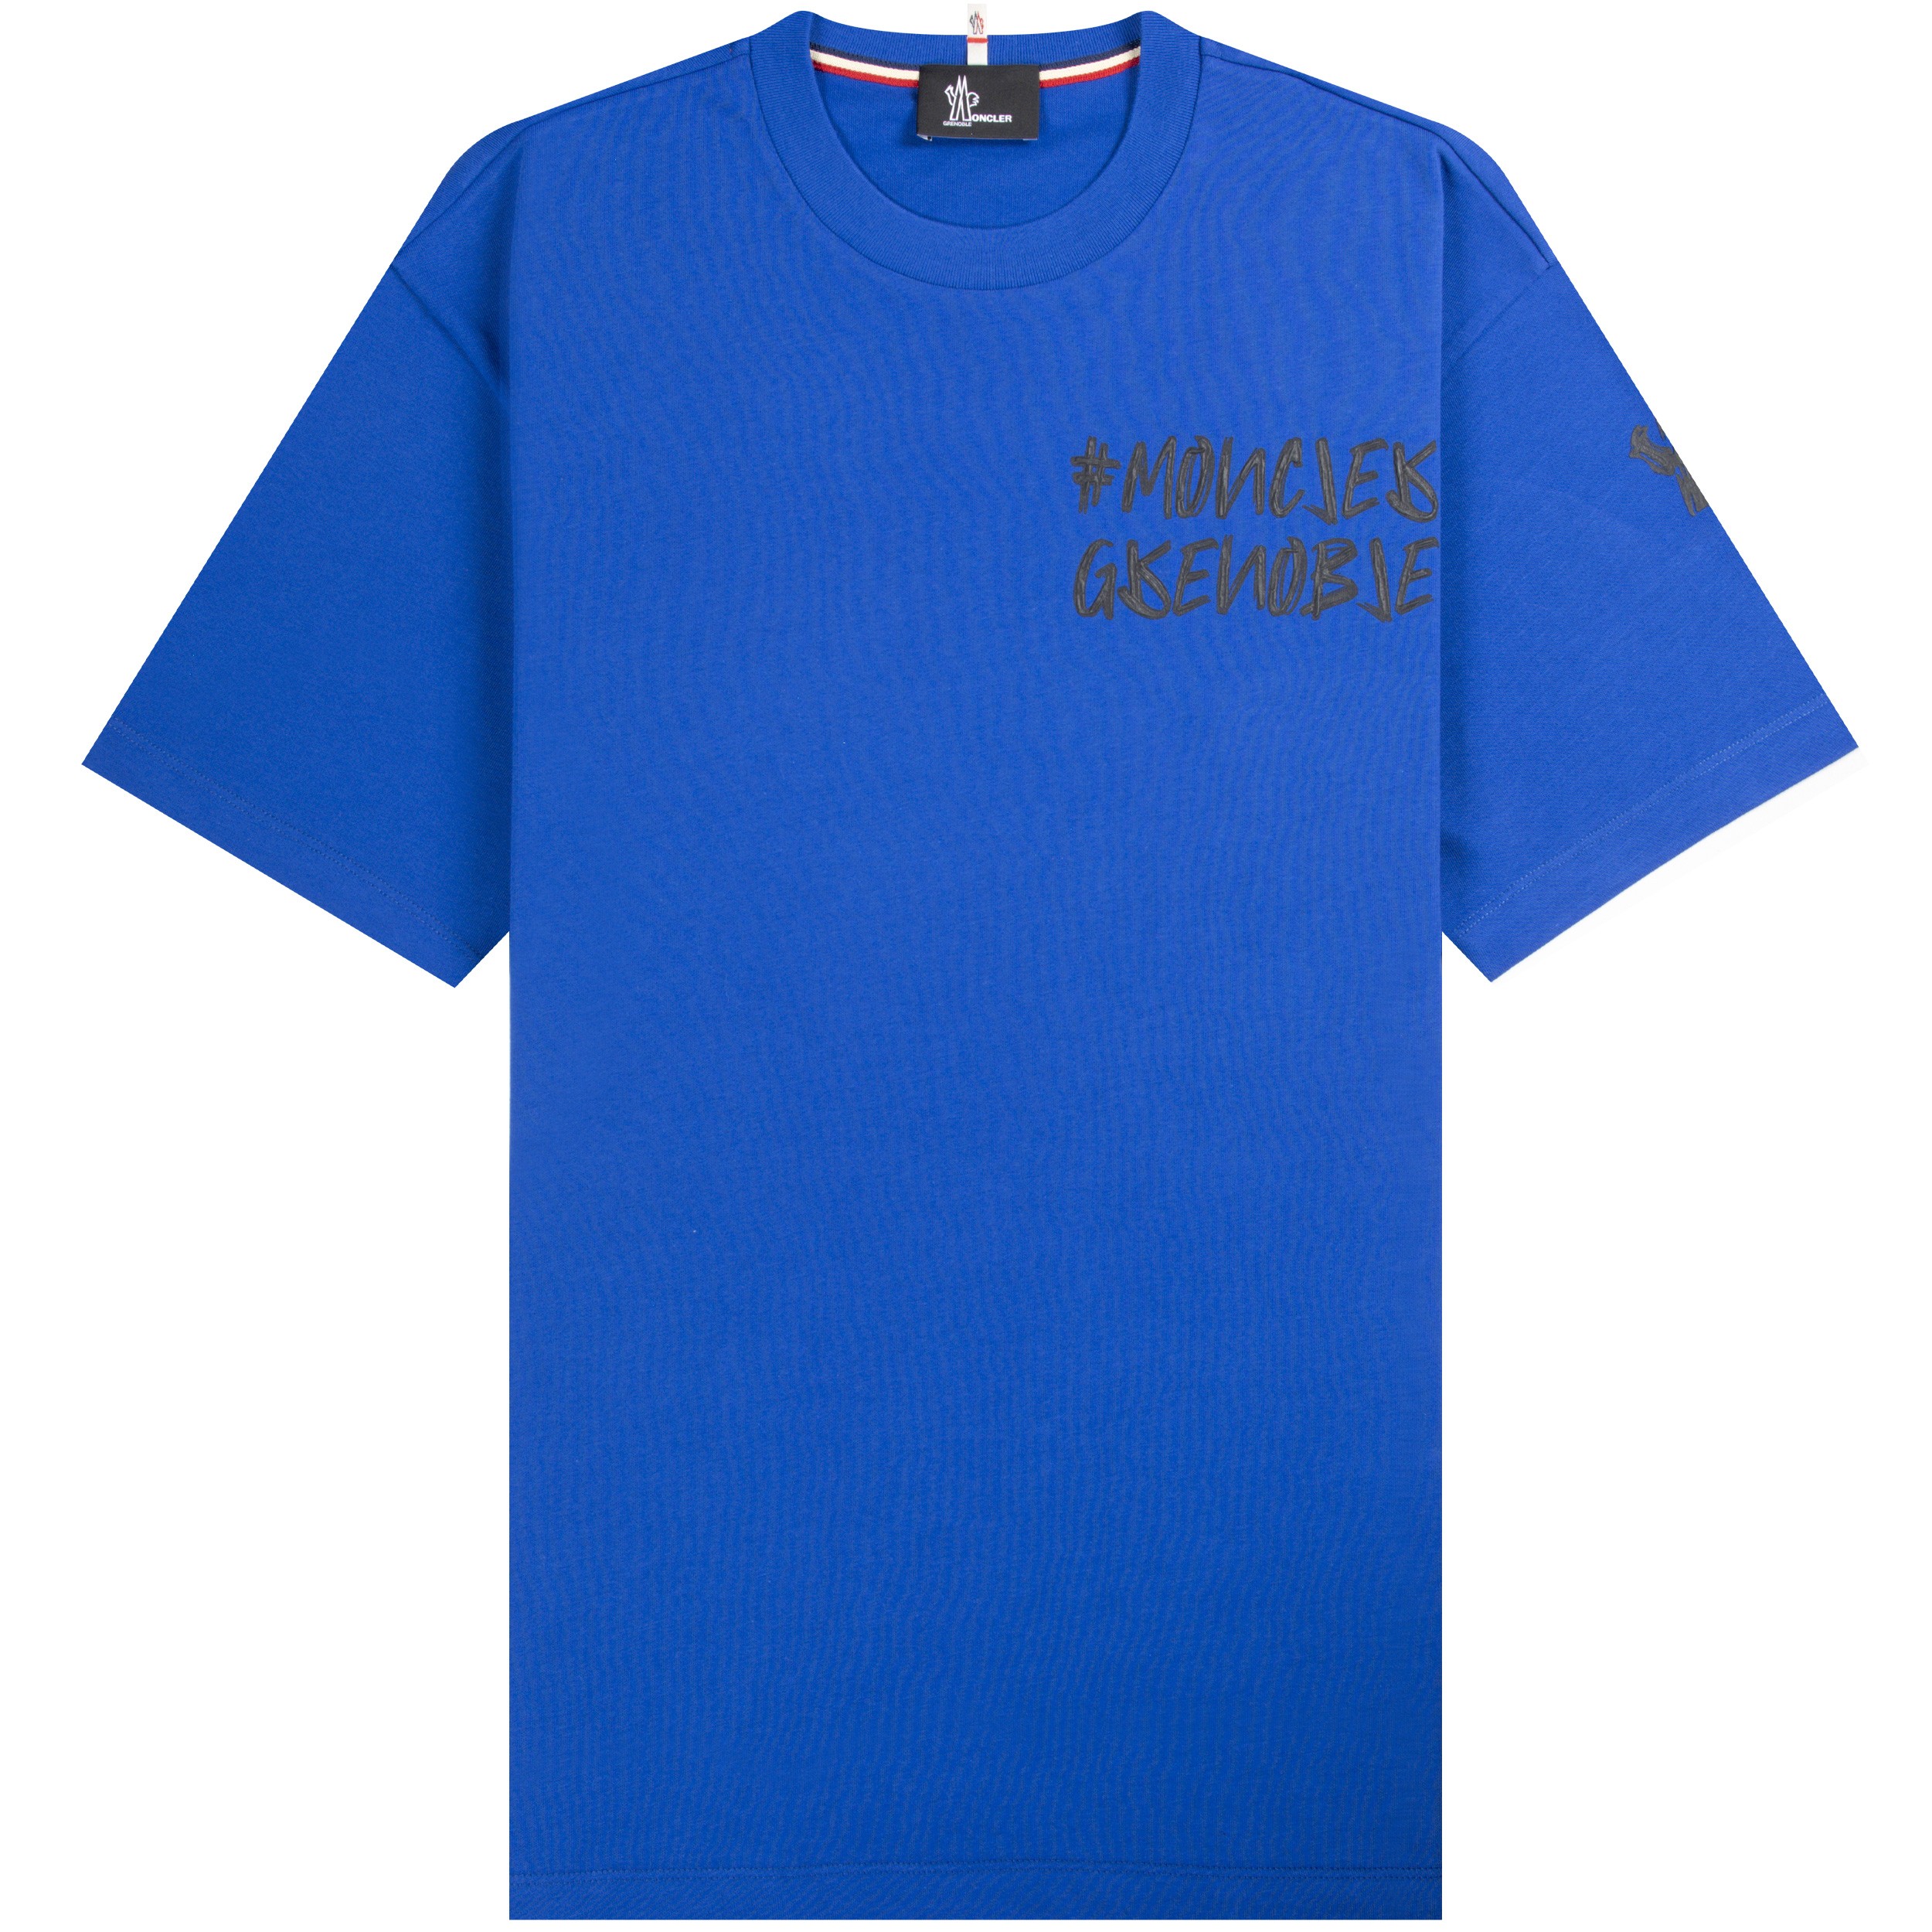 Moncler Grenoble 'Hashtag' Chest Logo T-shirt Cobalt Blue